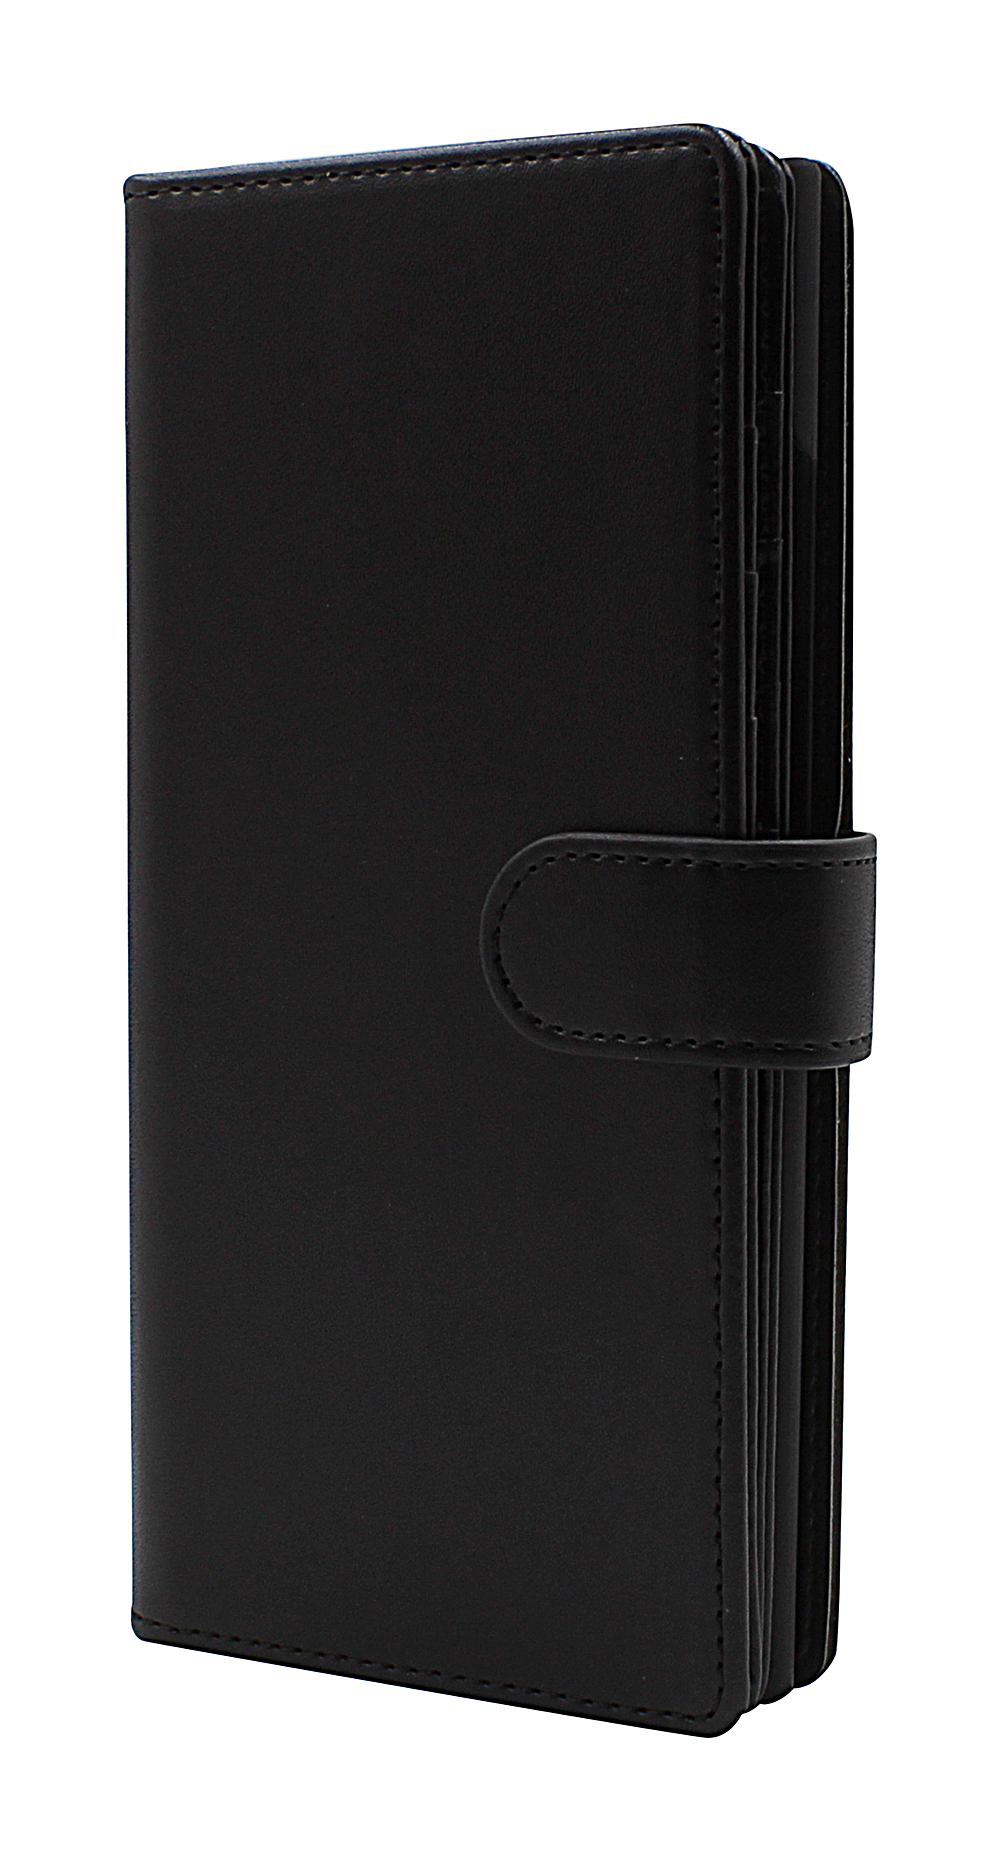 CoverInSkimblocker XL Magnet Fodral Samsung Galaxy Note 20 Ultra 5G (N986B/DS)